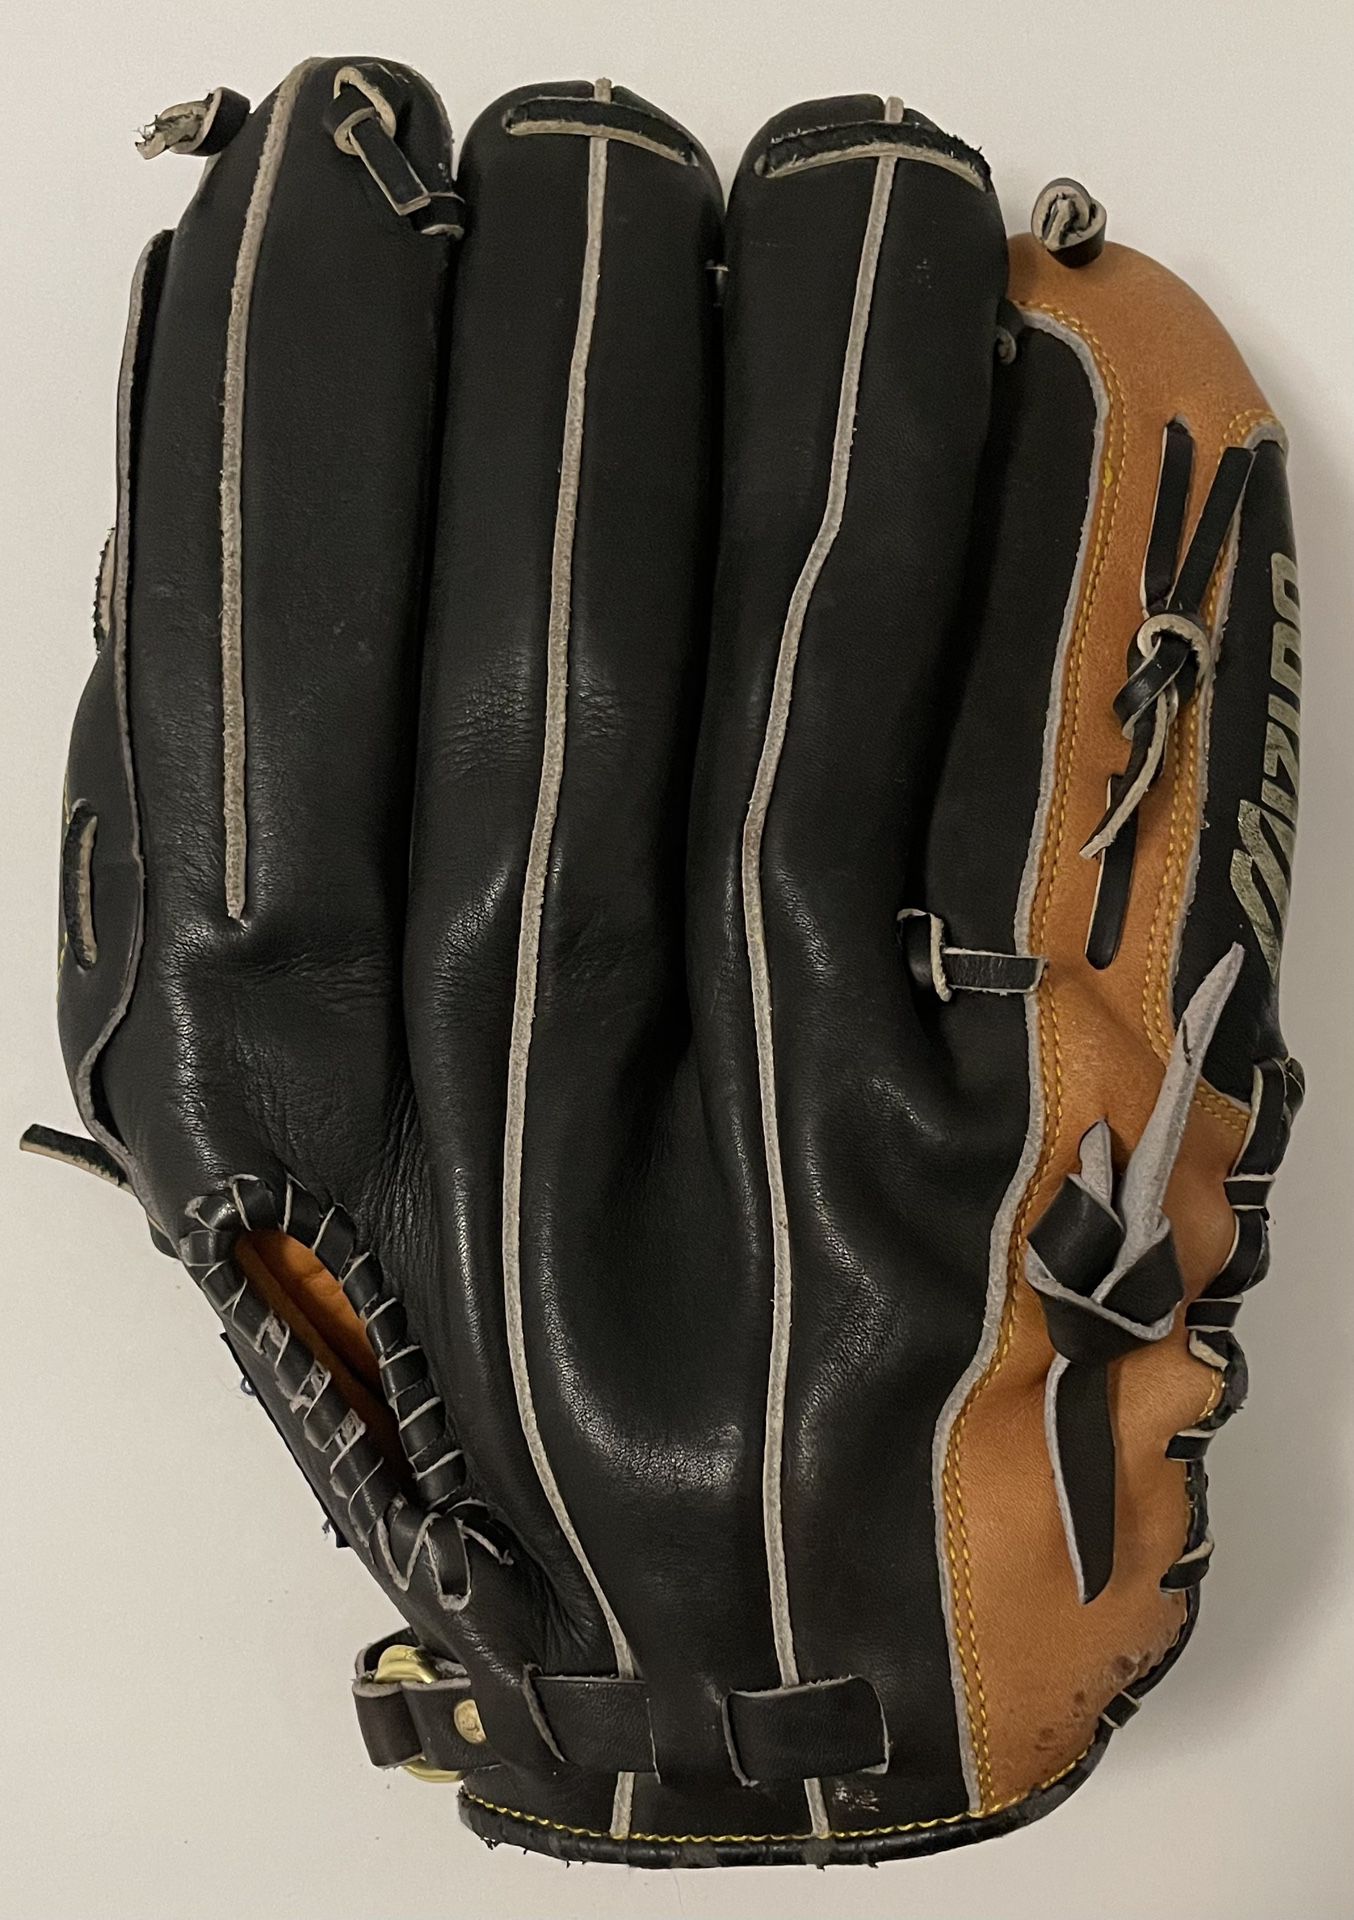 Mizuno Mz-1391 13" Professional Model Baseball/Softball Glove